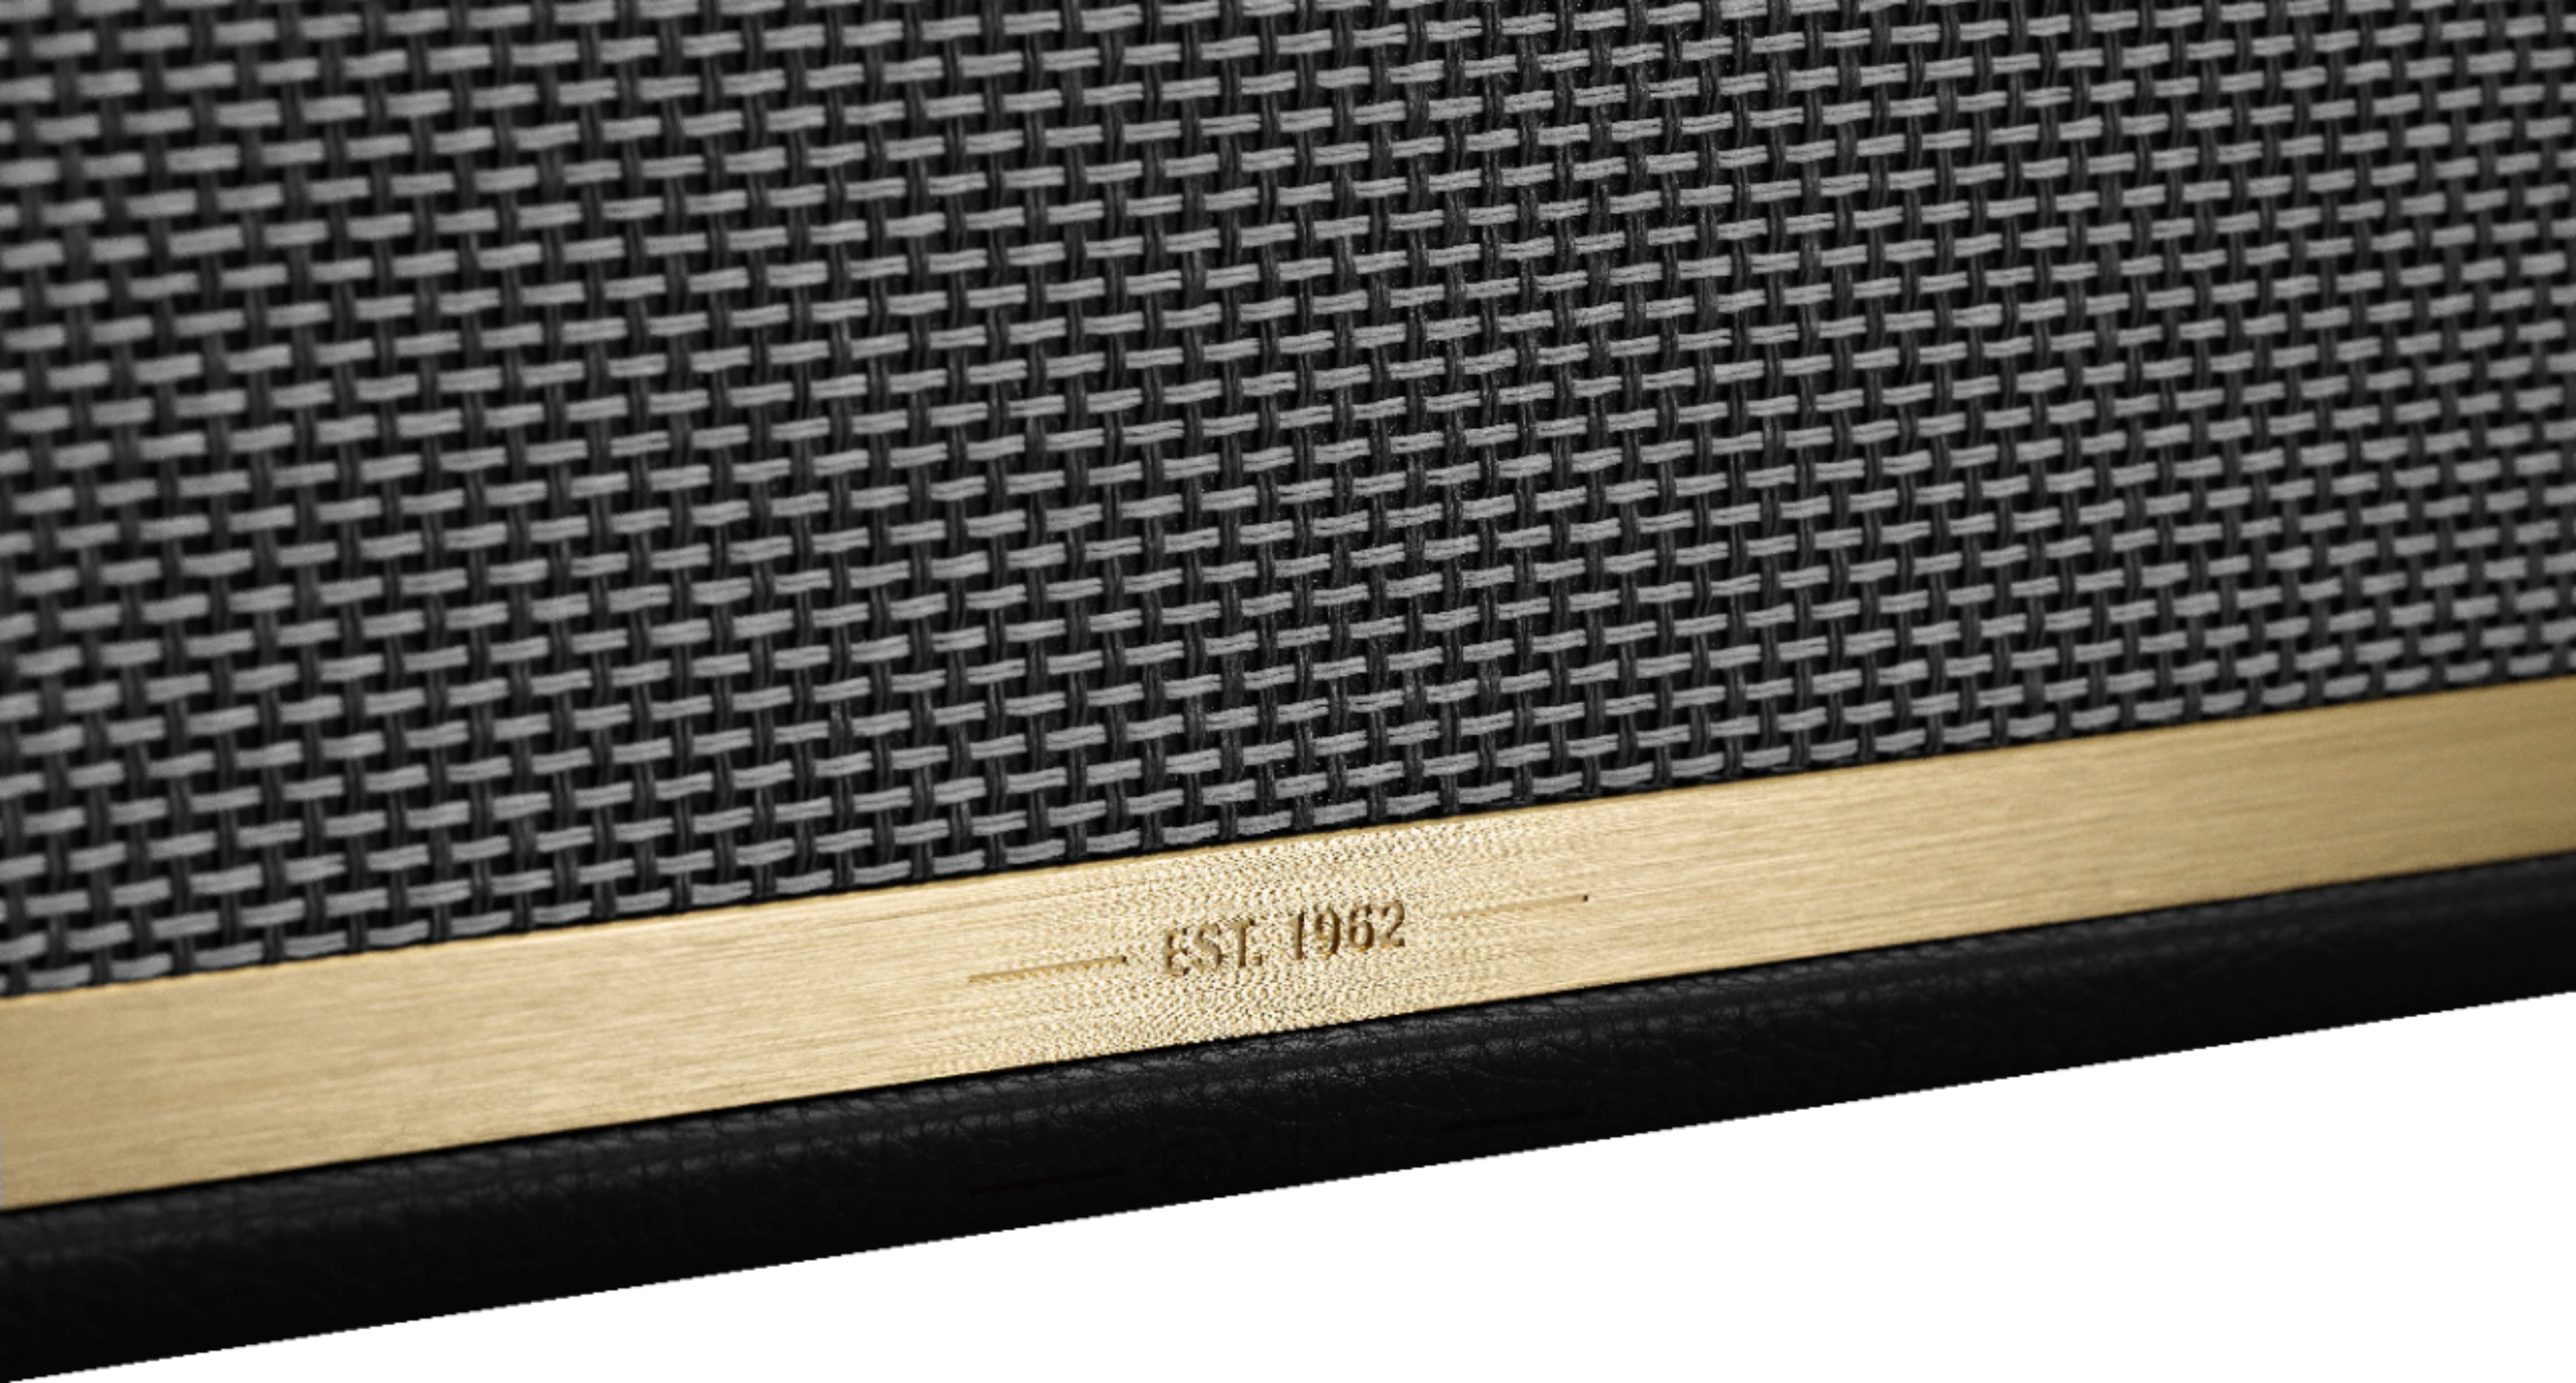 OPEN BOX Marshall Stanmore II 80W Bluetooth Speaker - Black (READ)